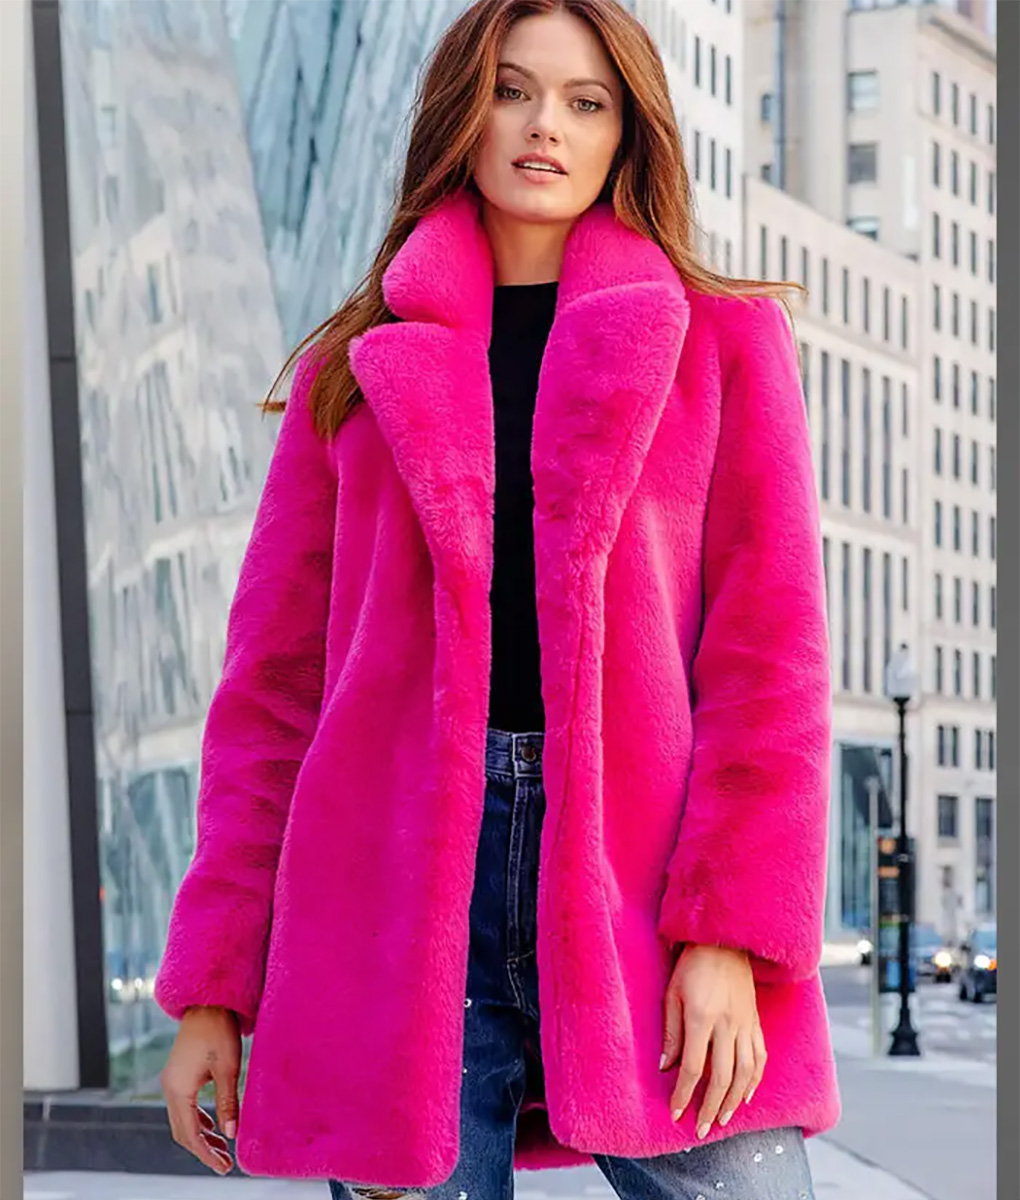 Women's Stylish Fur Shocking Pink Coat